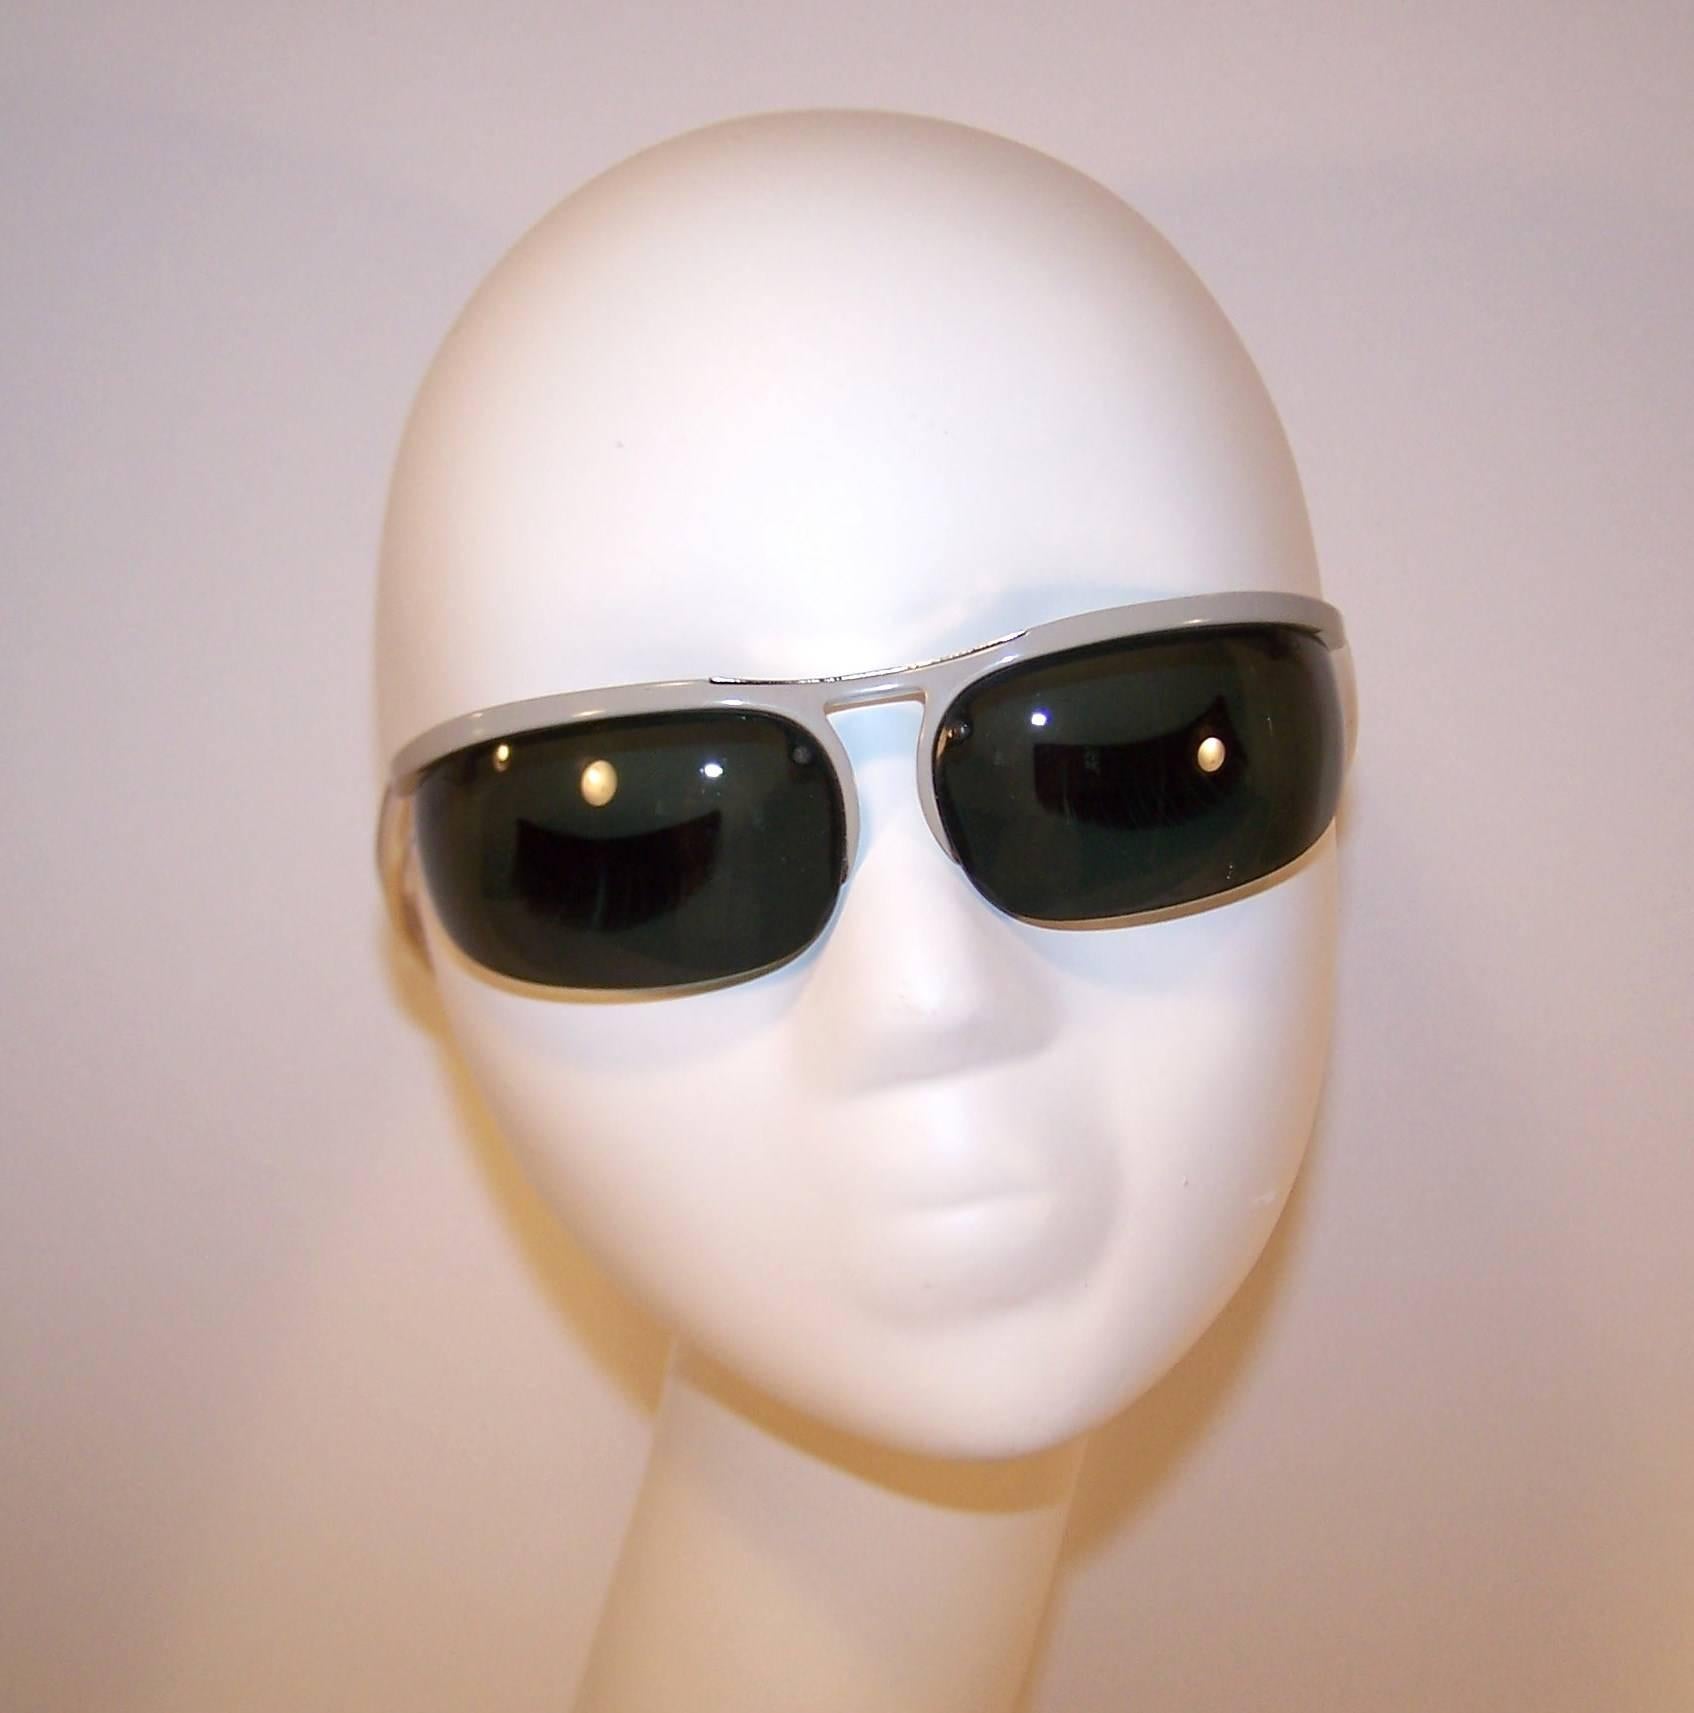 renauld of france sunglasses